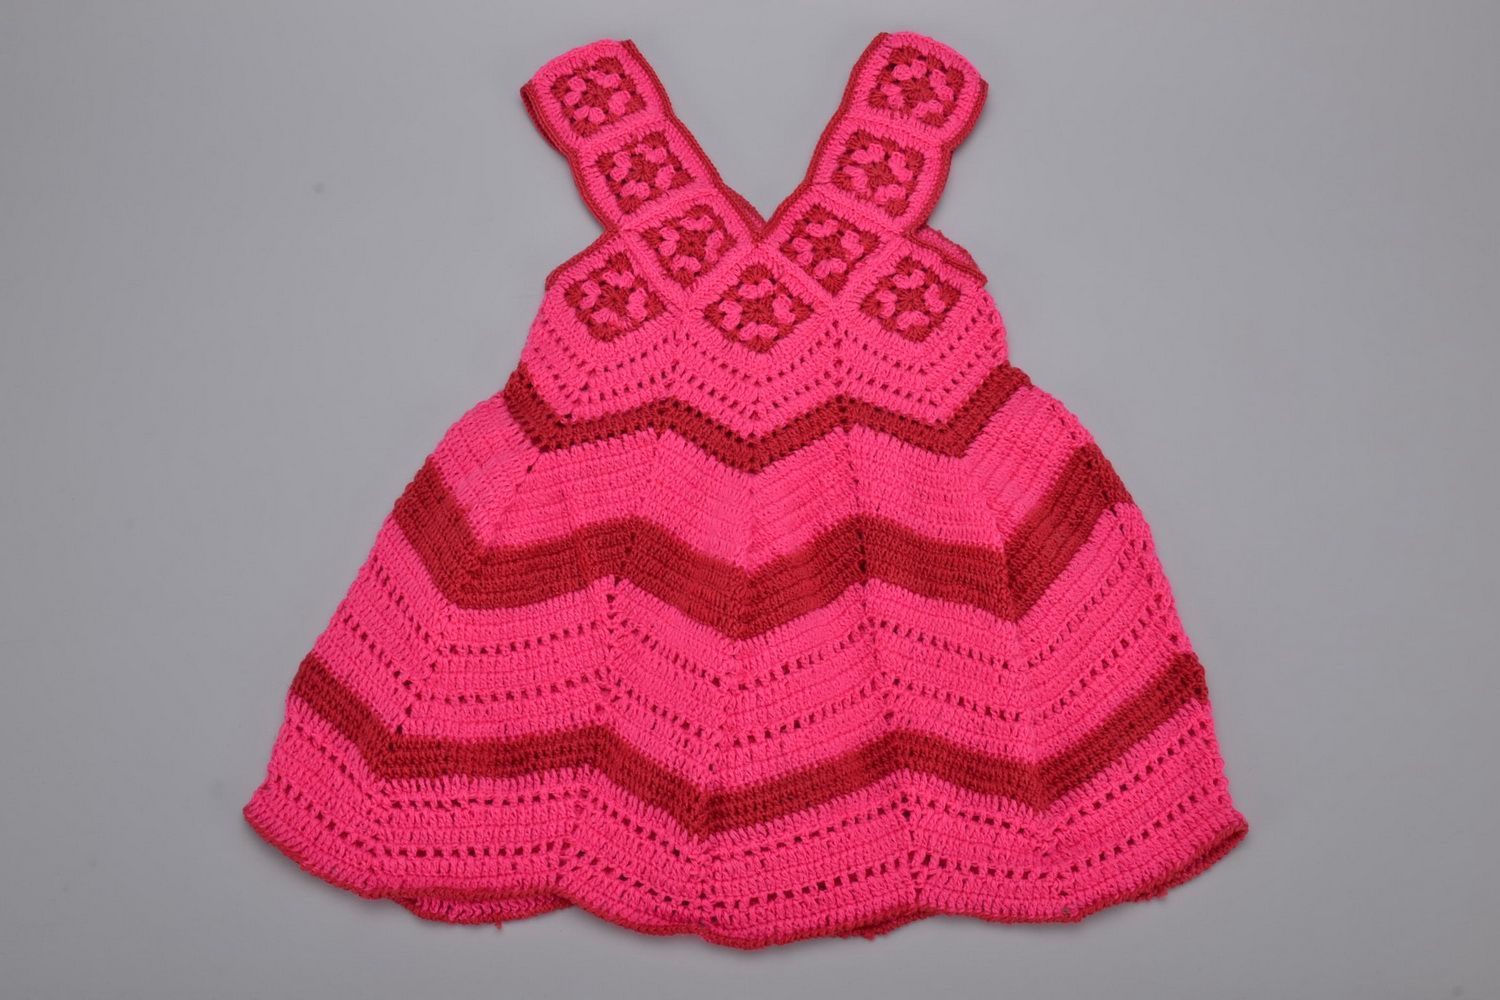 Crochet sun dress for a girl photo 1